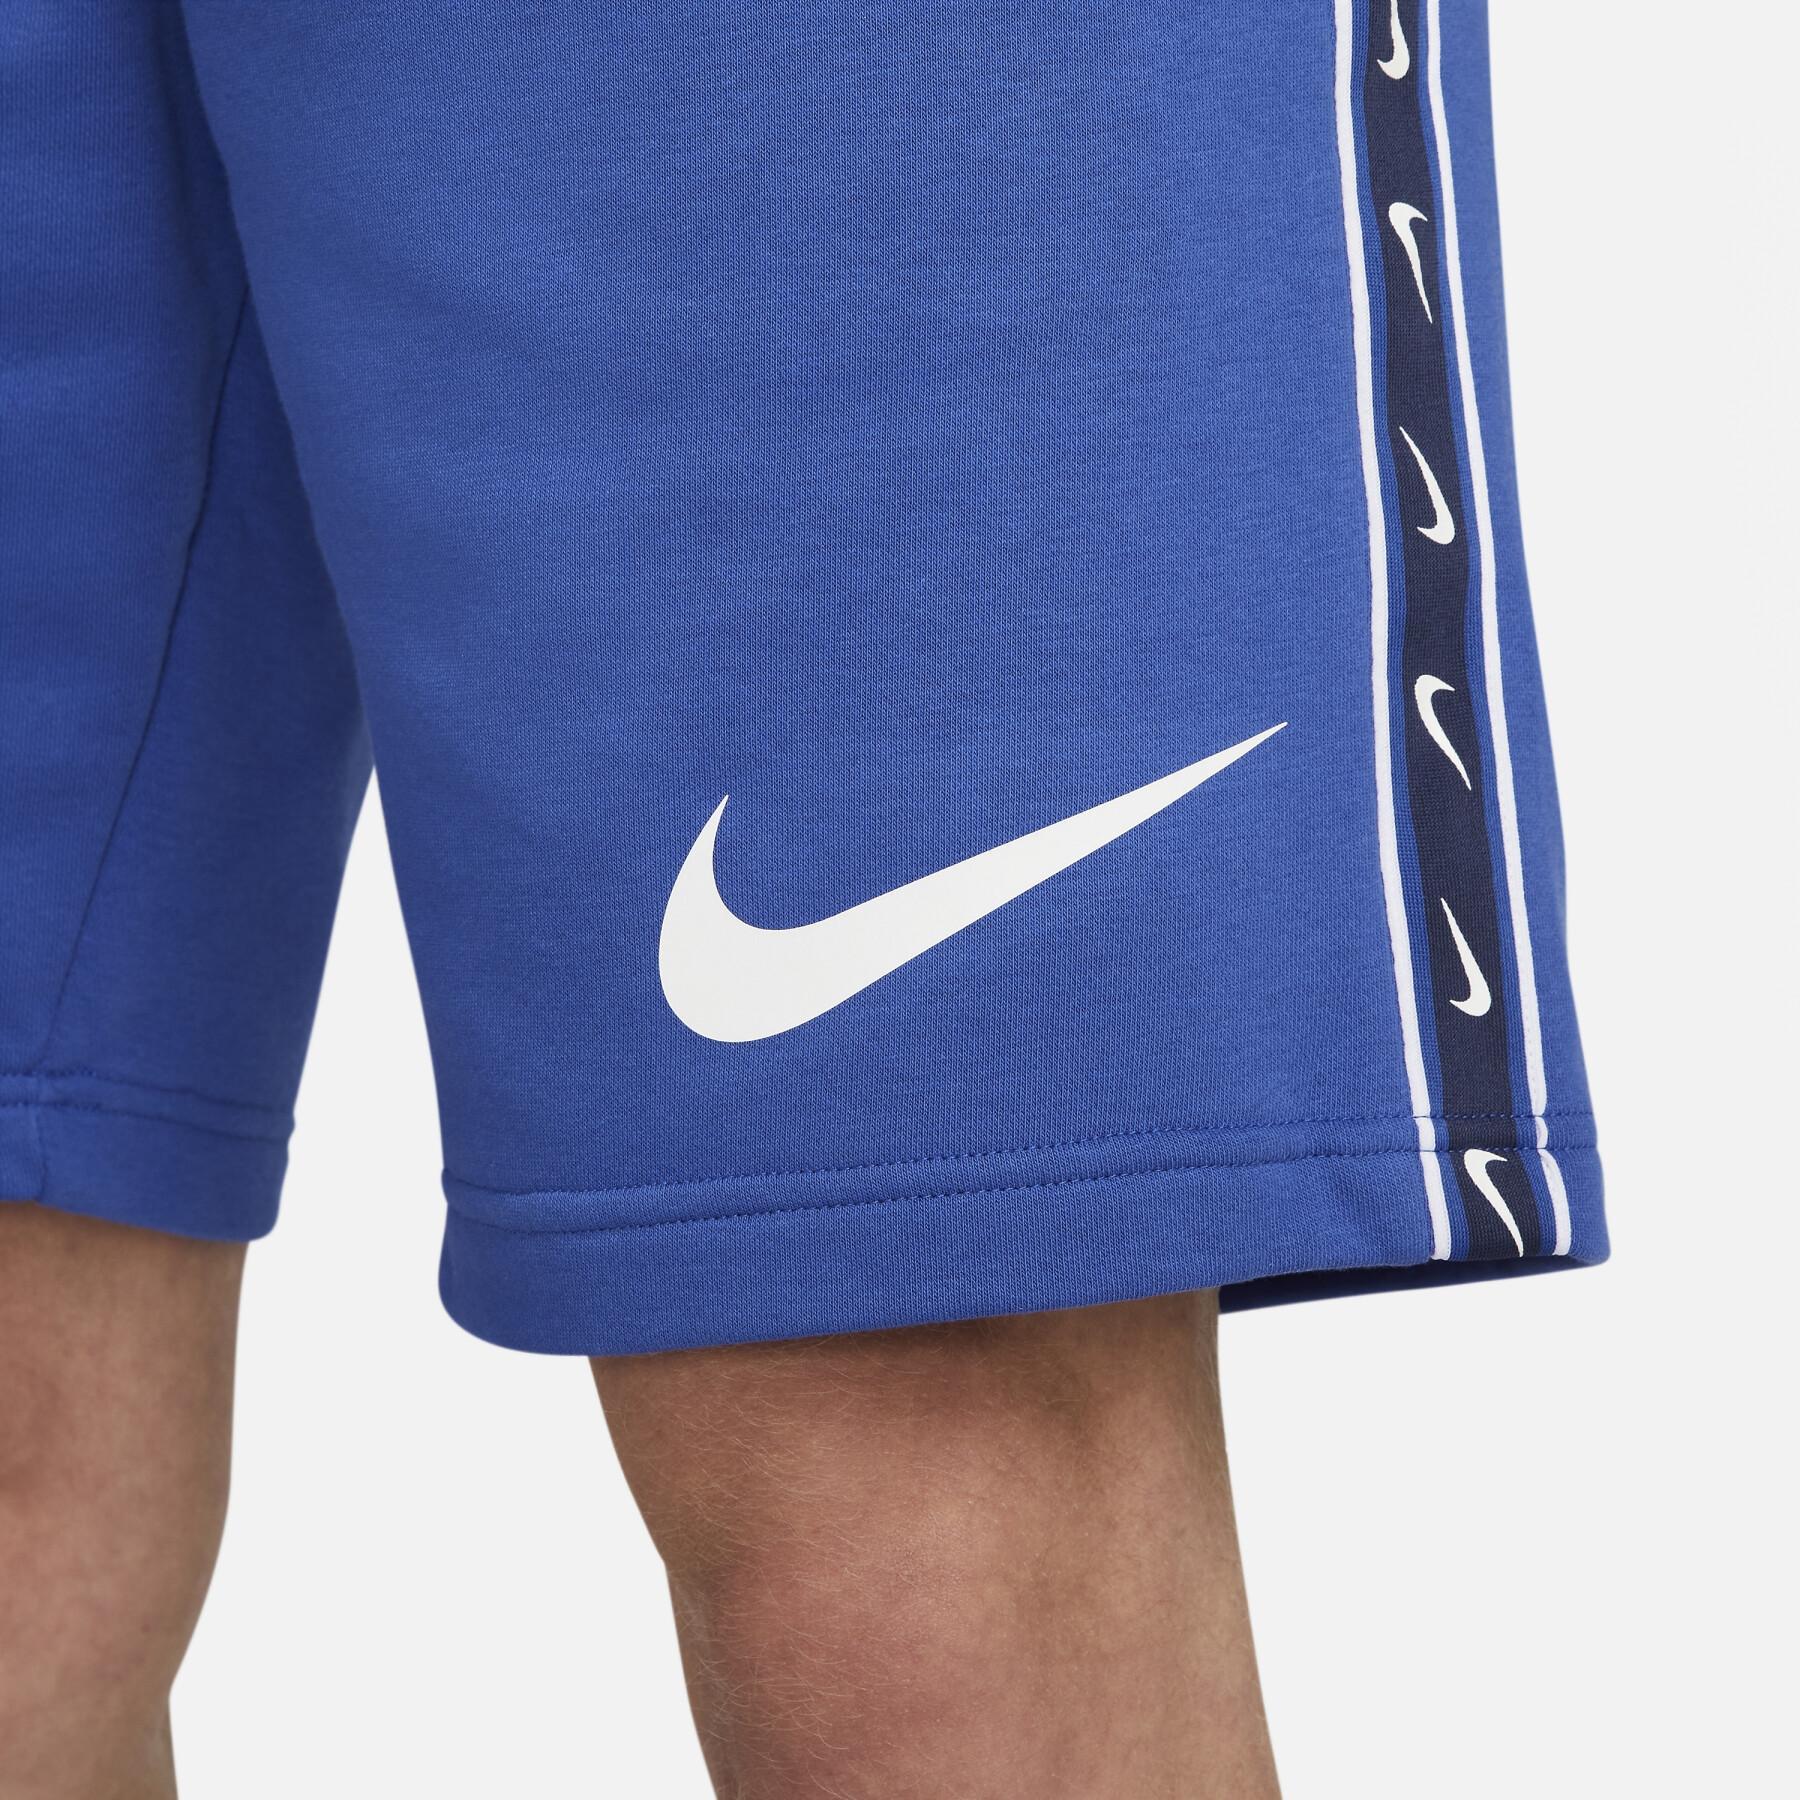 Pantalón corto Nike Repeat FT